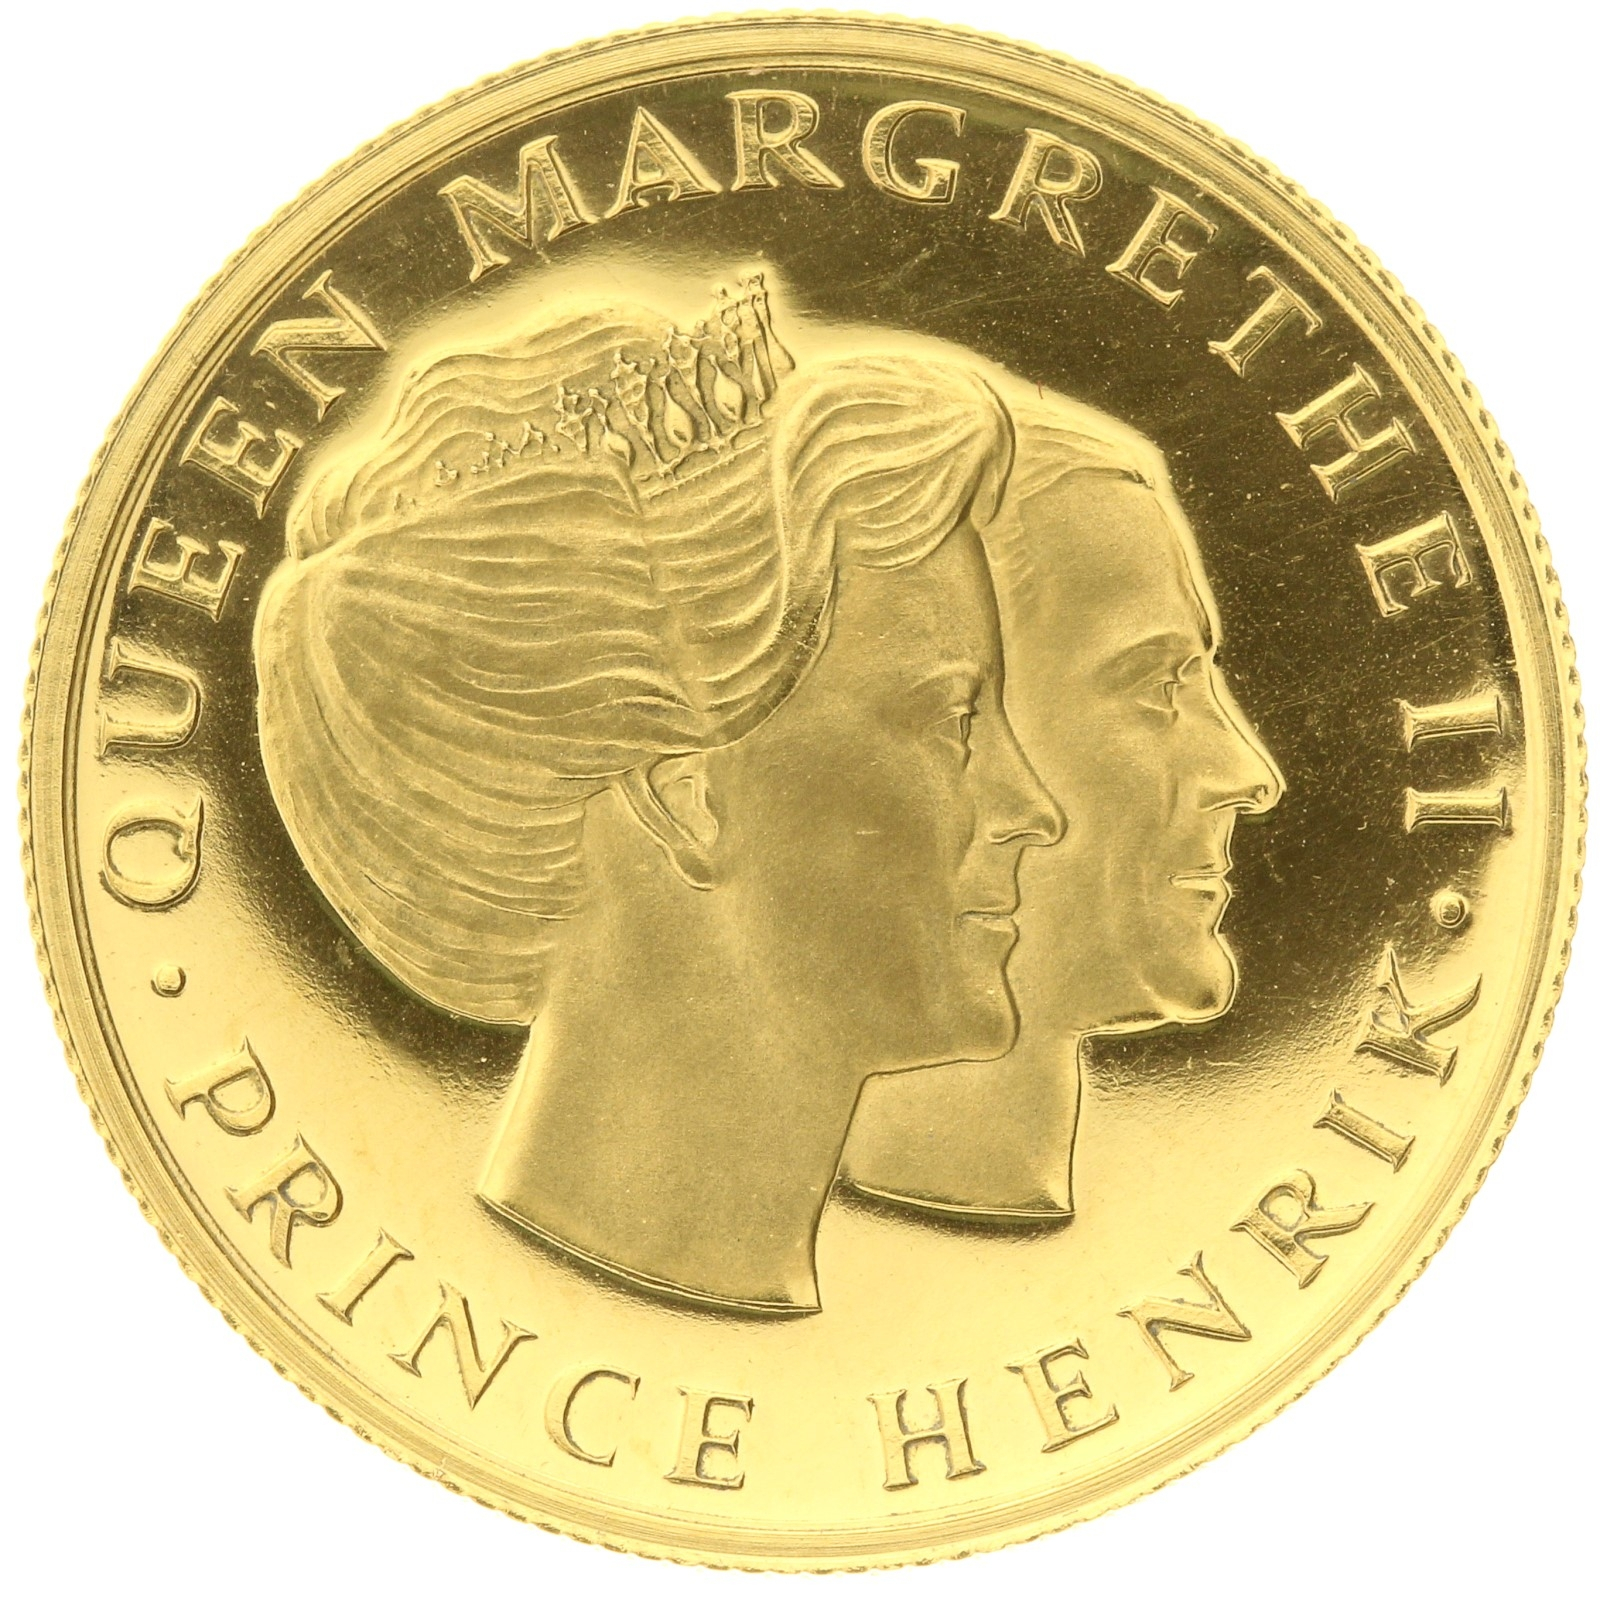 Denmark - Medal (1 ducat) - 1974 - Royal Visit to Great Britain